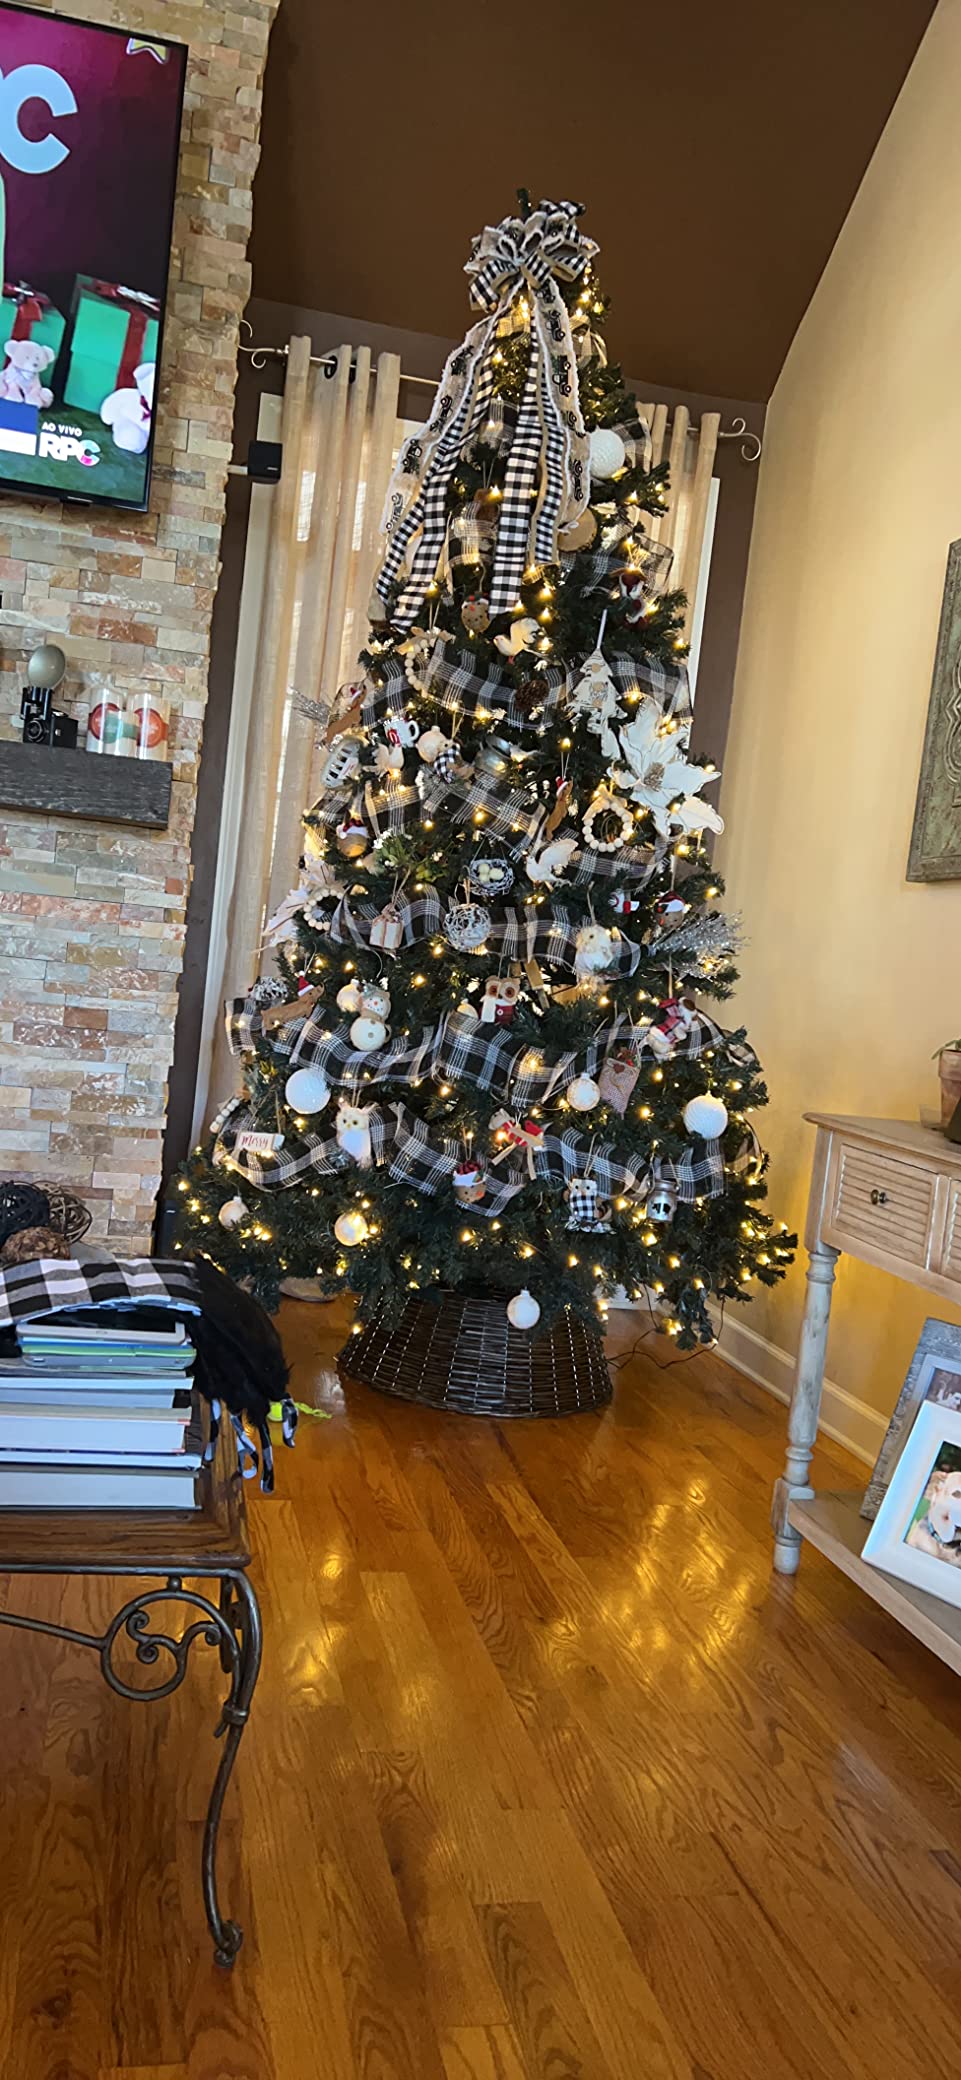 Great Christmas tree